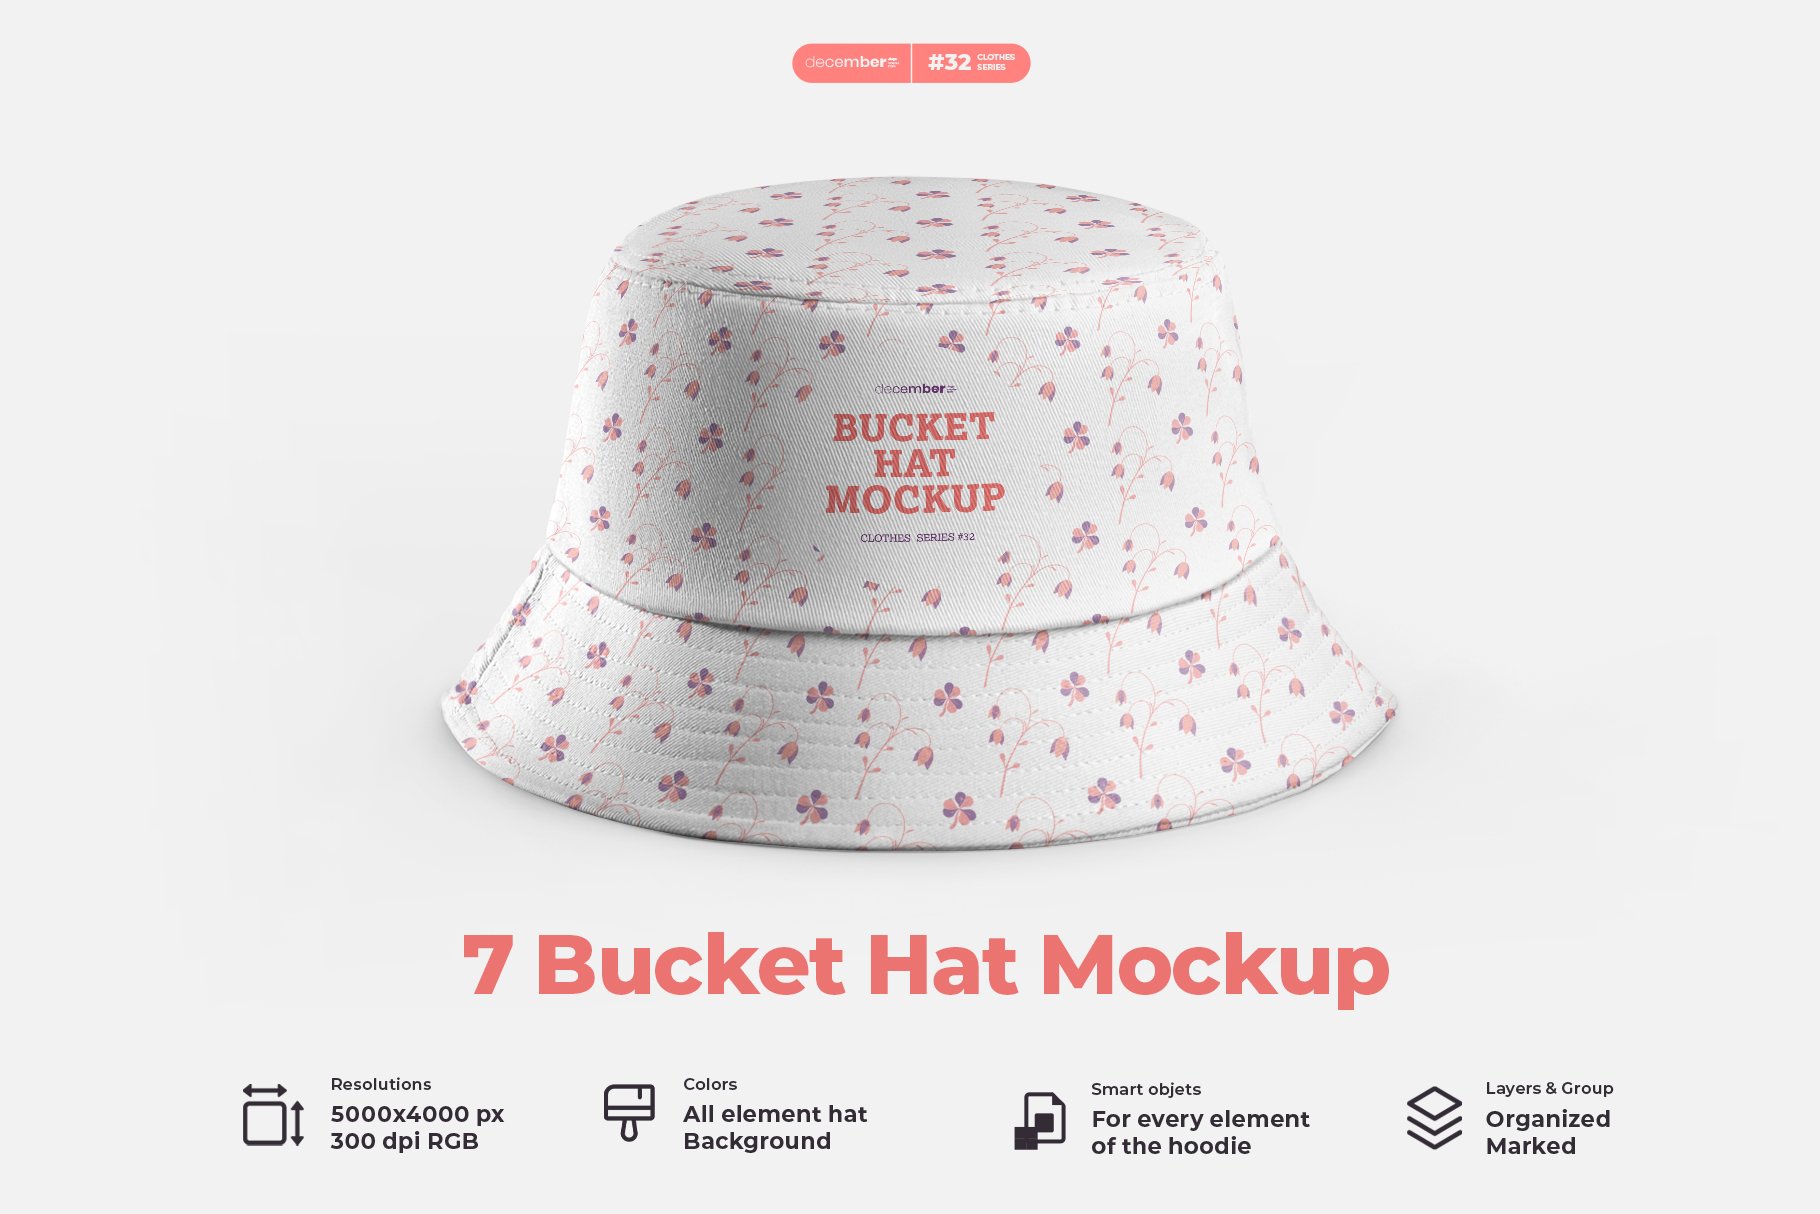 7 Bucket Hat Mockups cover image.